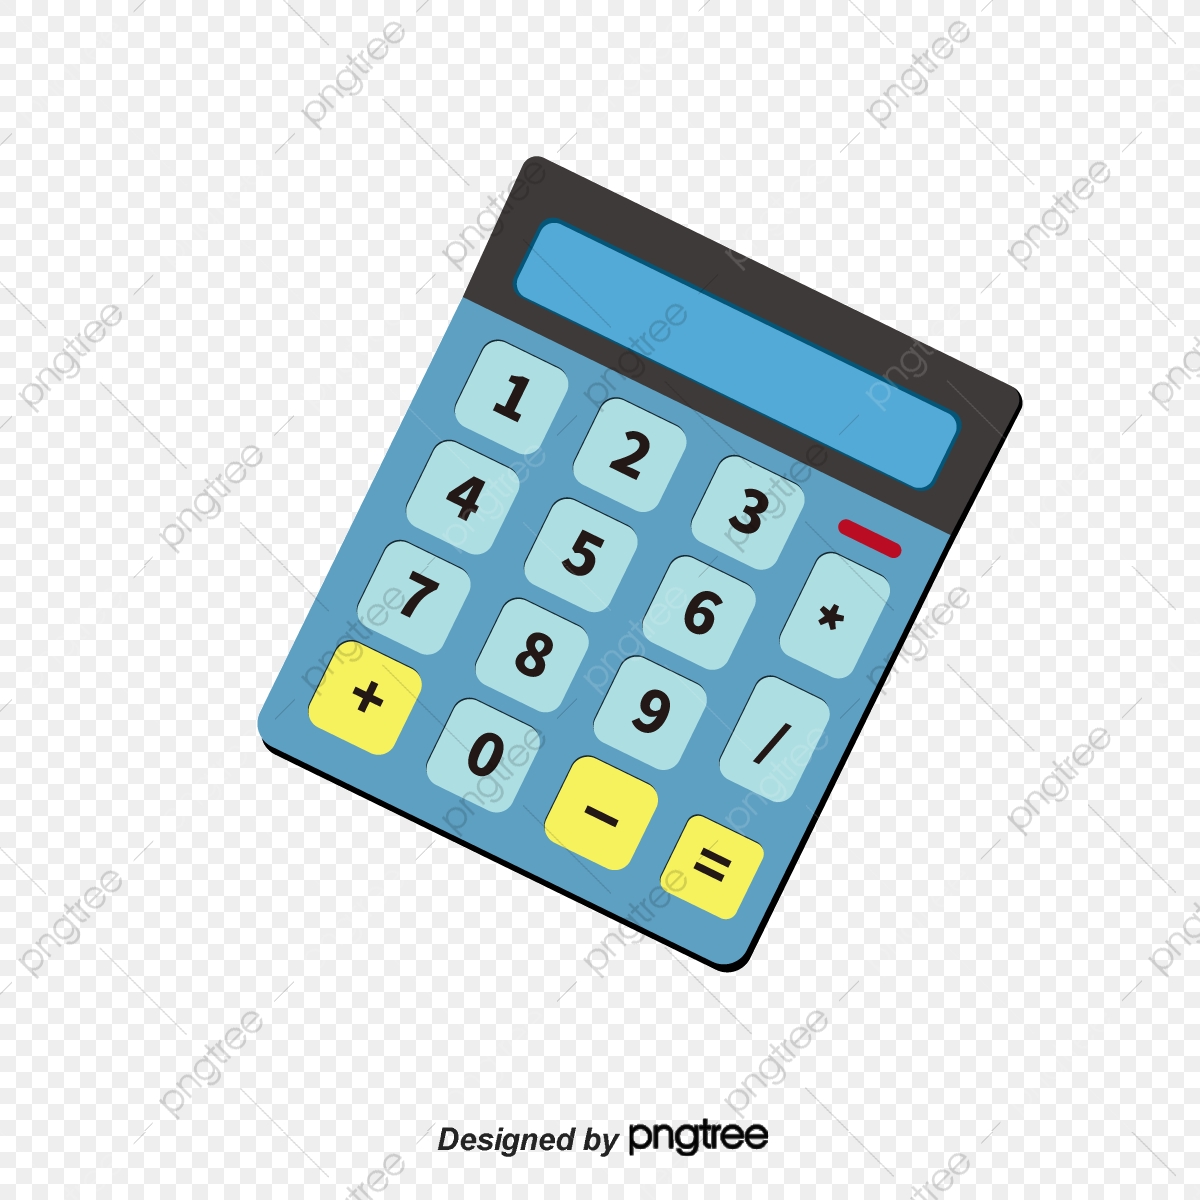 calculator clipart vector